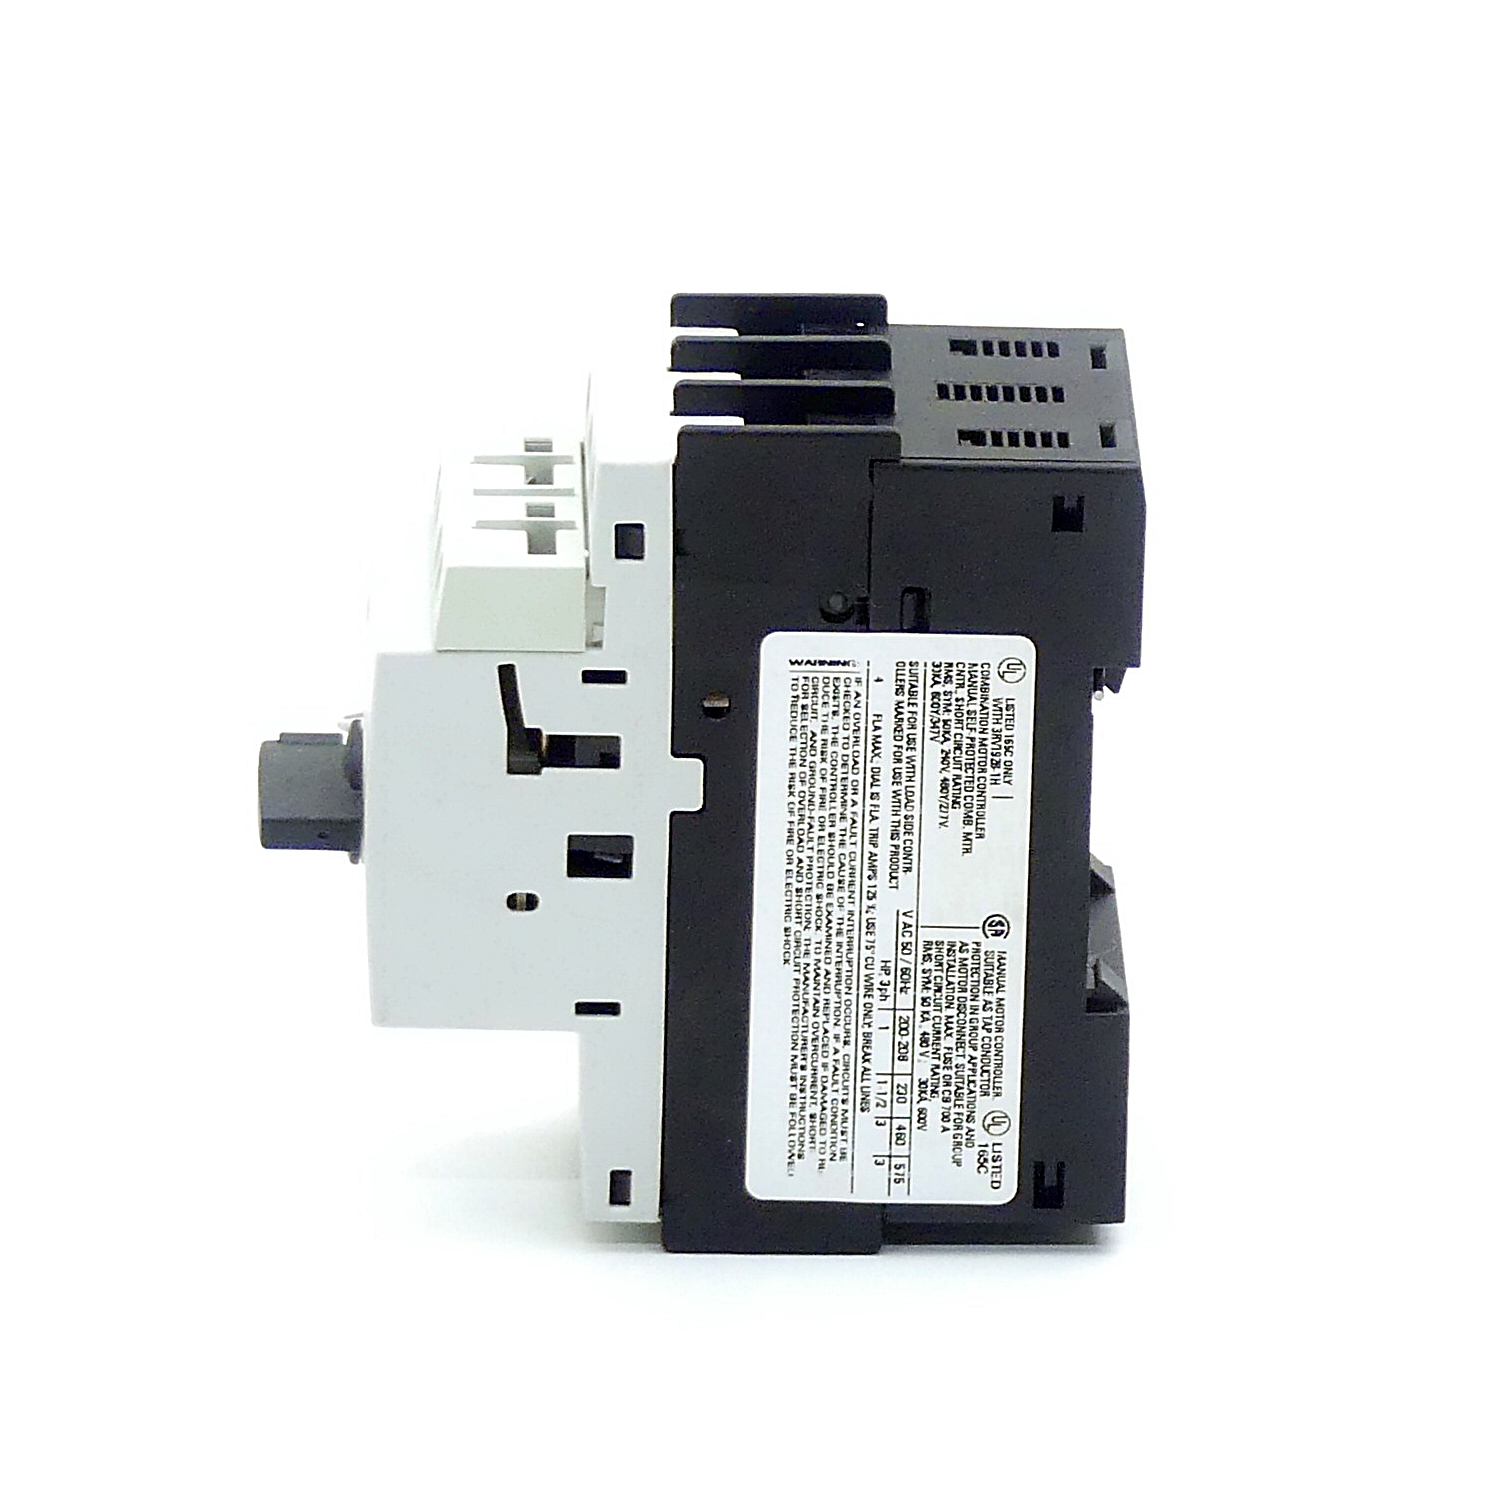 Circuit breaker 3RV1021-1EA15 